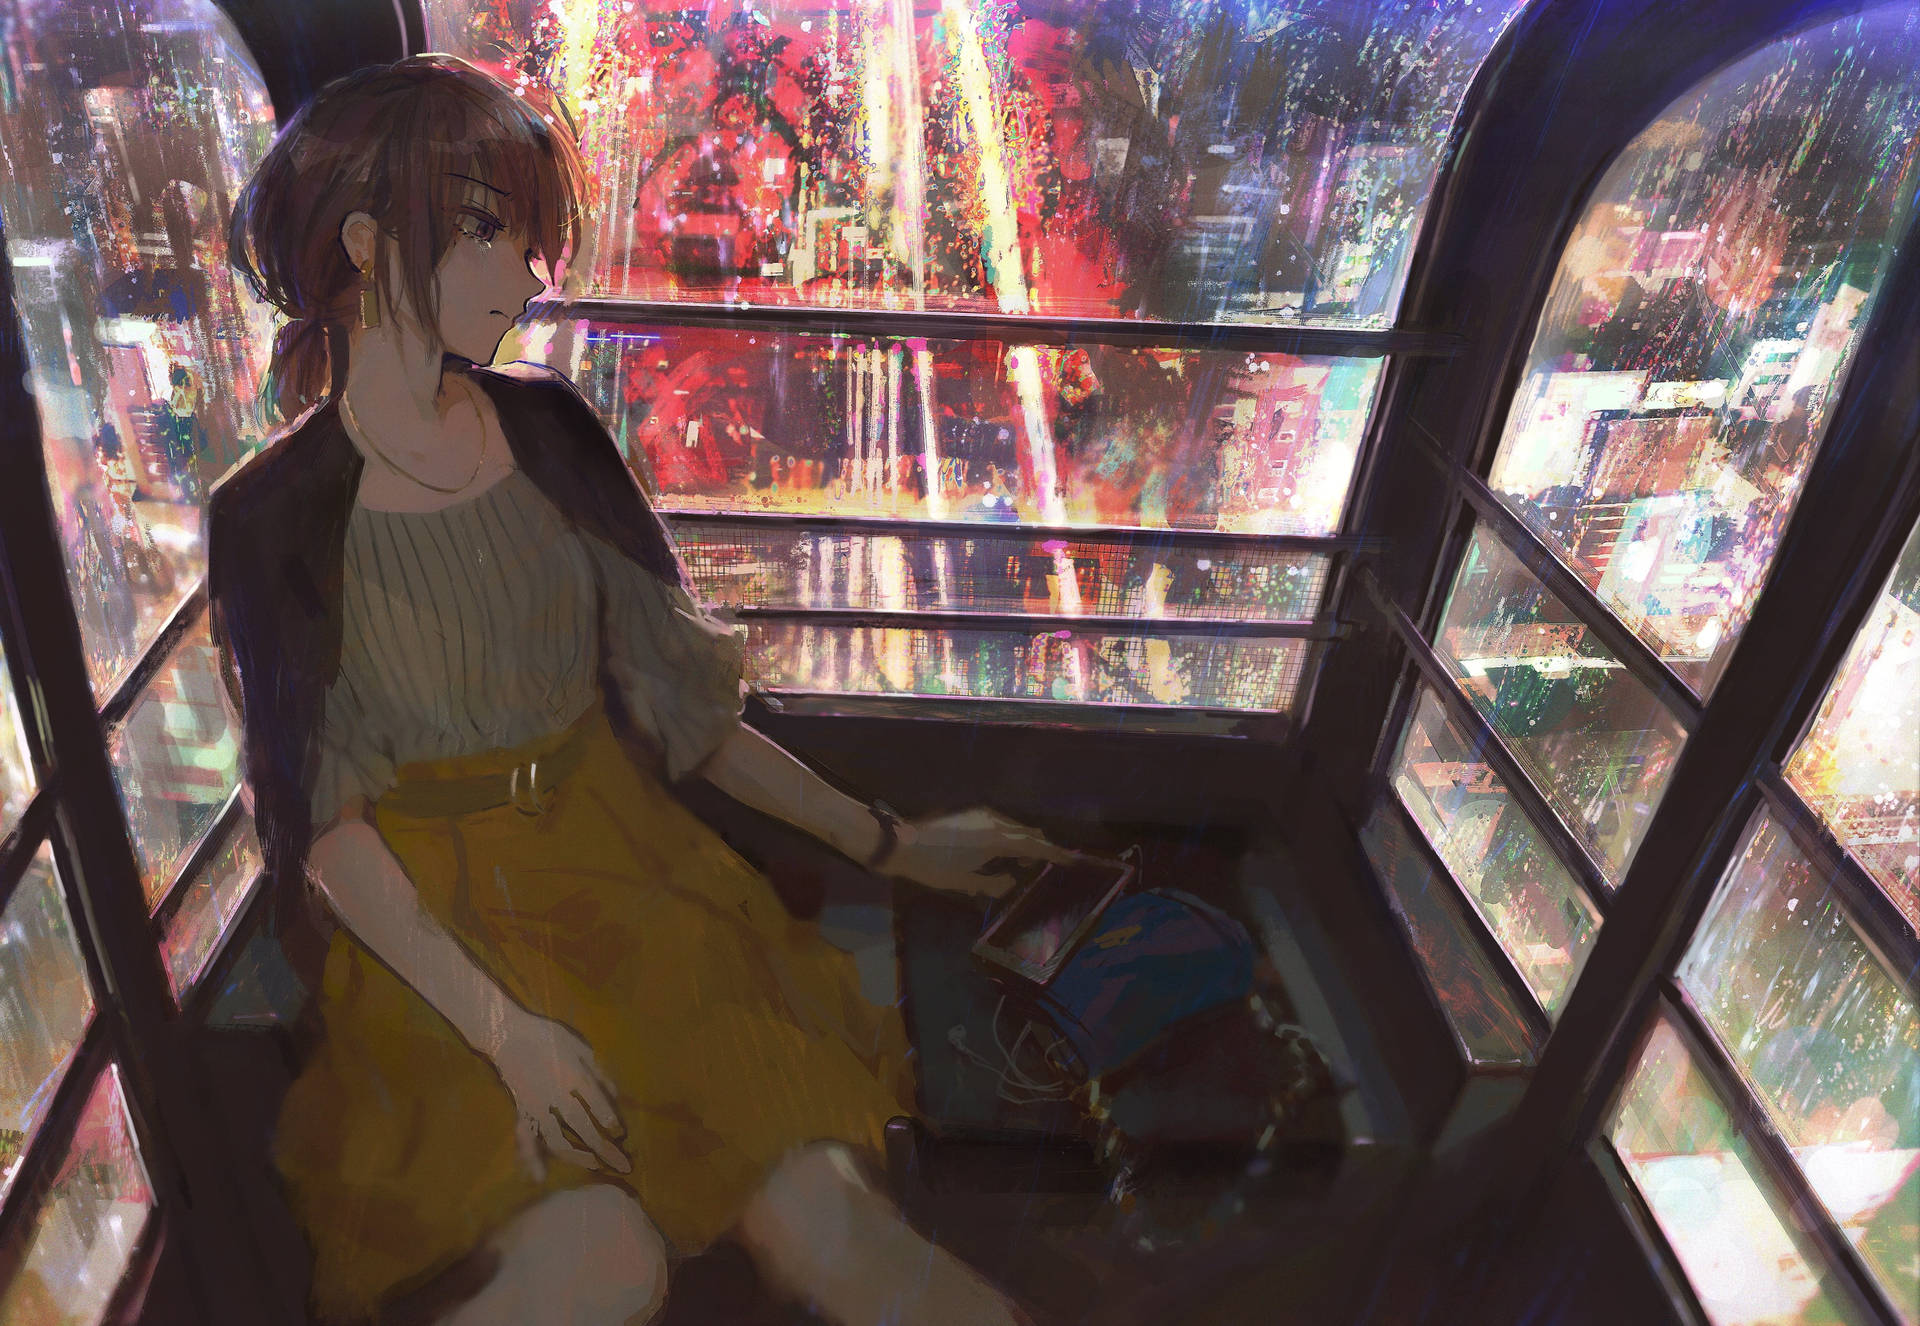 Aesthetic Sad Anime Girl In Ferris Wheel Background